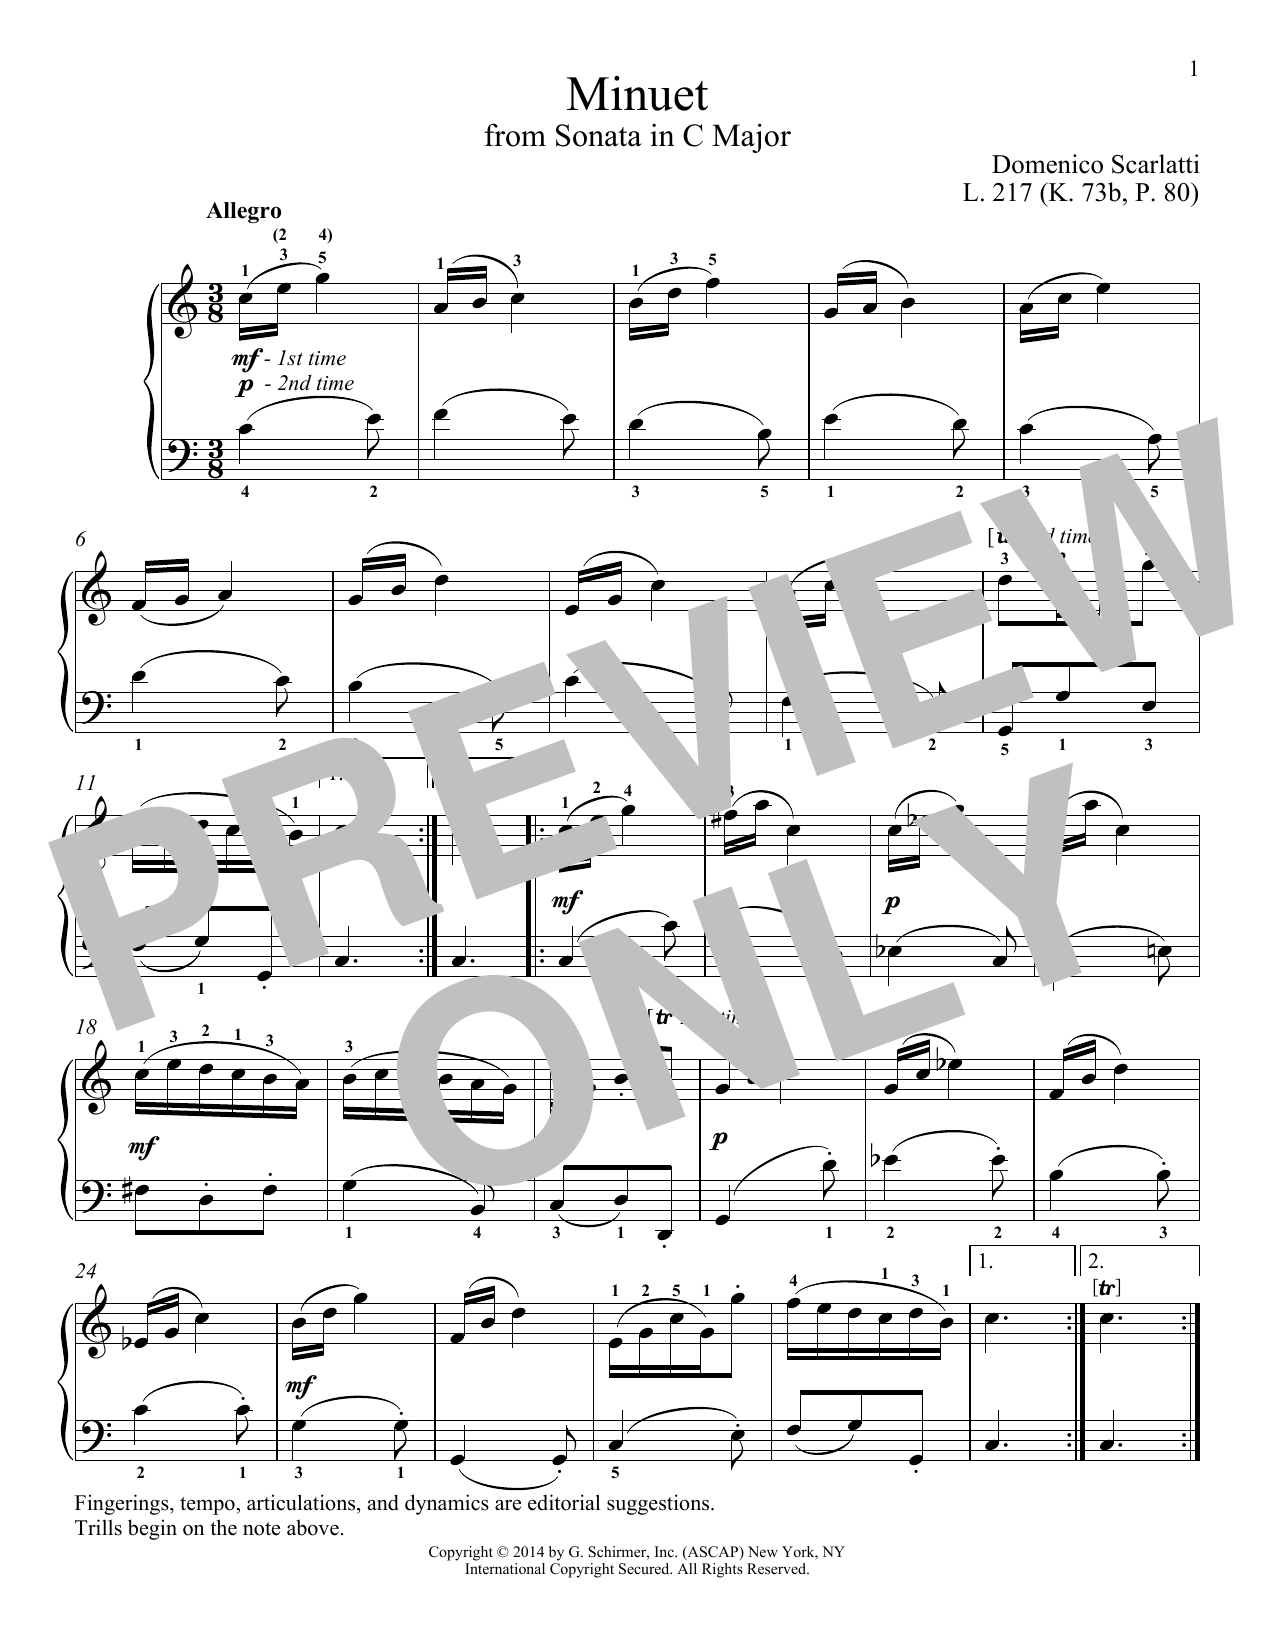 Domenico Scarlatti Minuet In A Minor, L. 217 Sheet Music Notes & Chords for Piano - Download or Print PDF